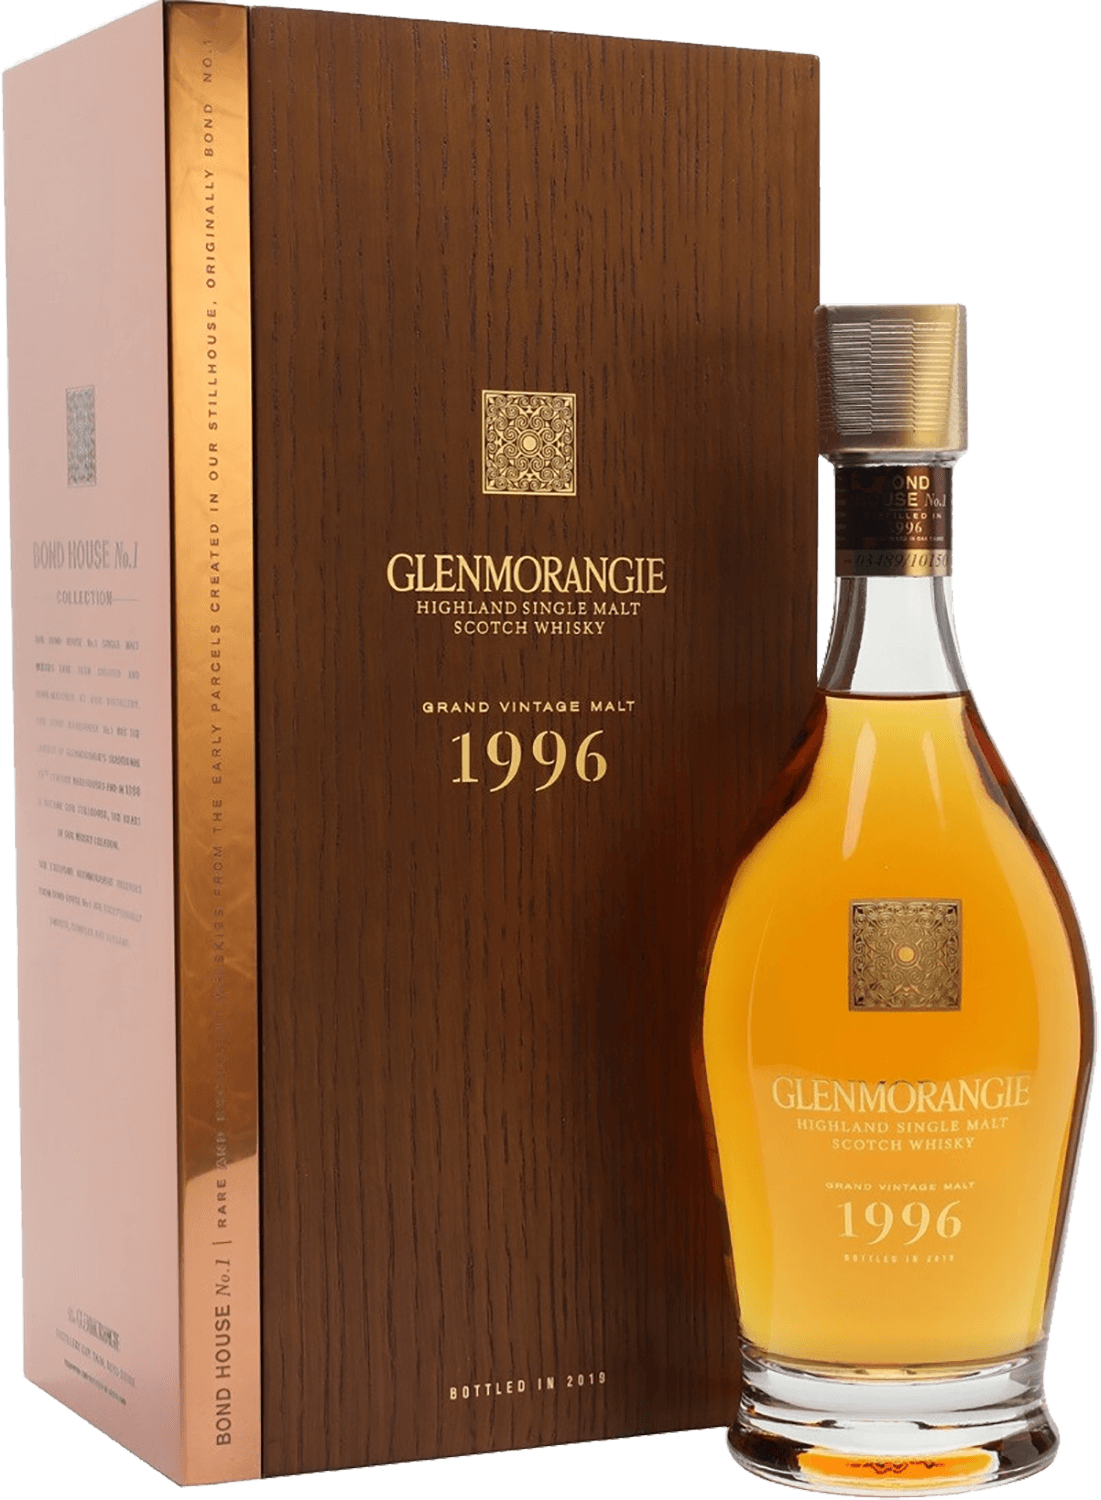 Glenmorangie Grand Vintage Malt Highland Single Malt Scotch Whisky (gift box)